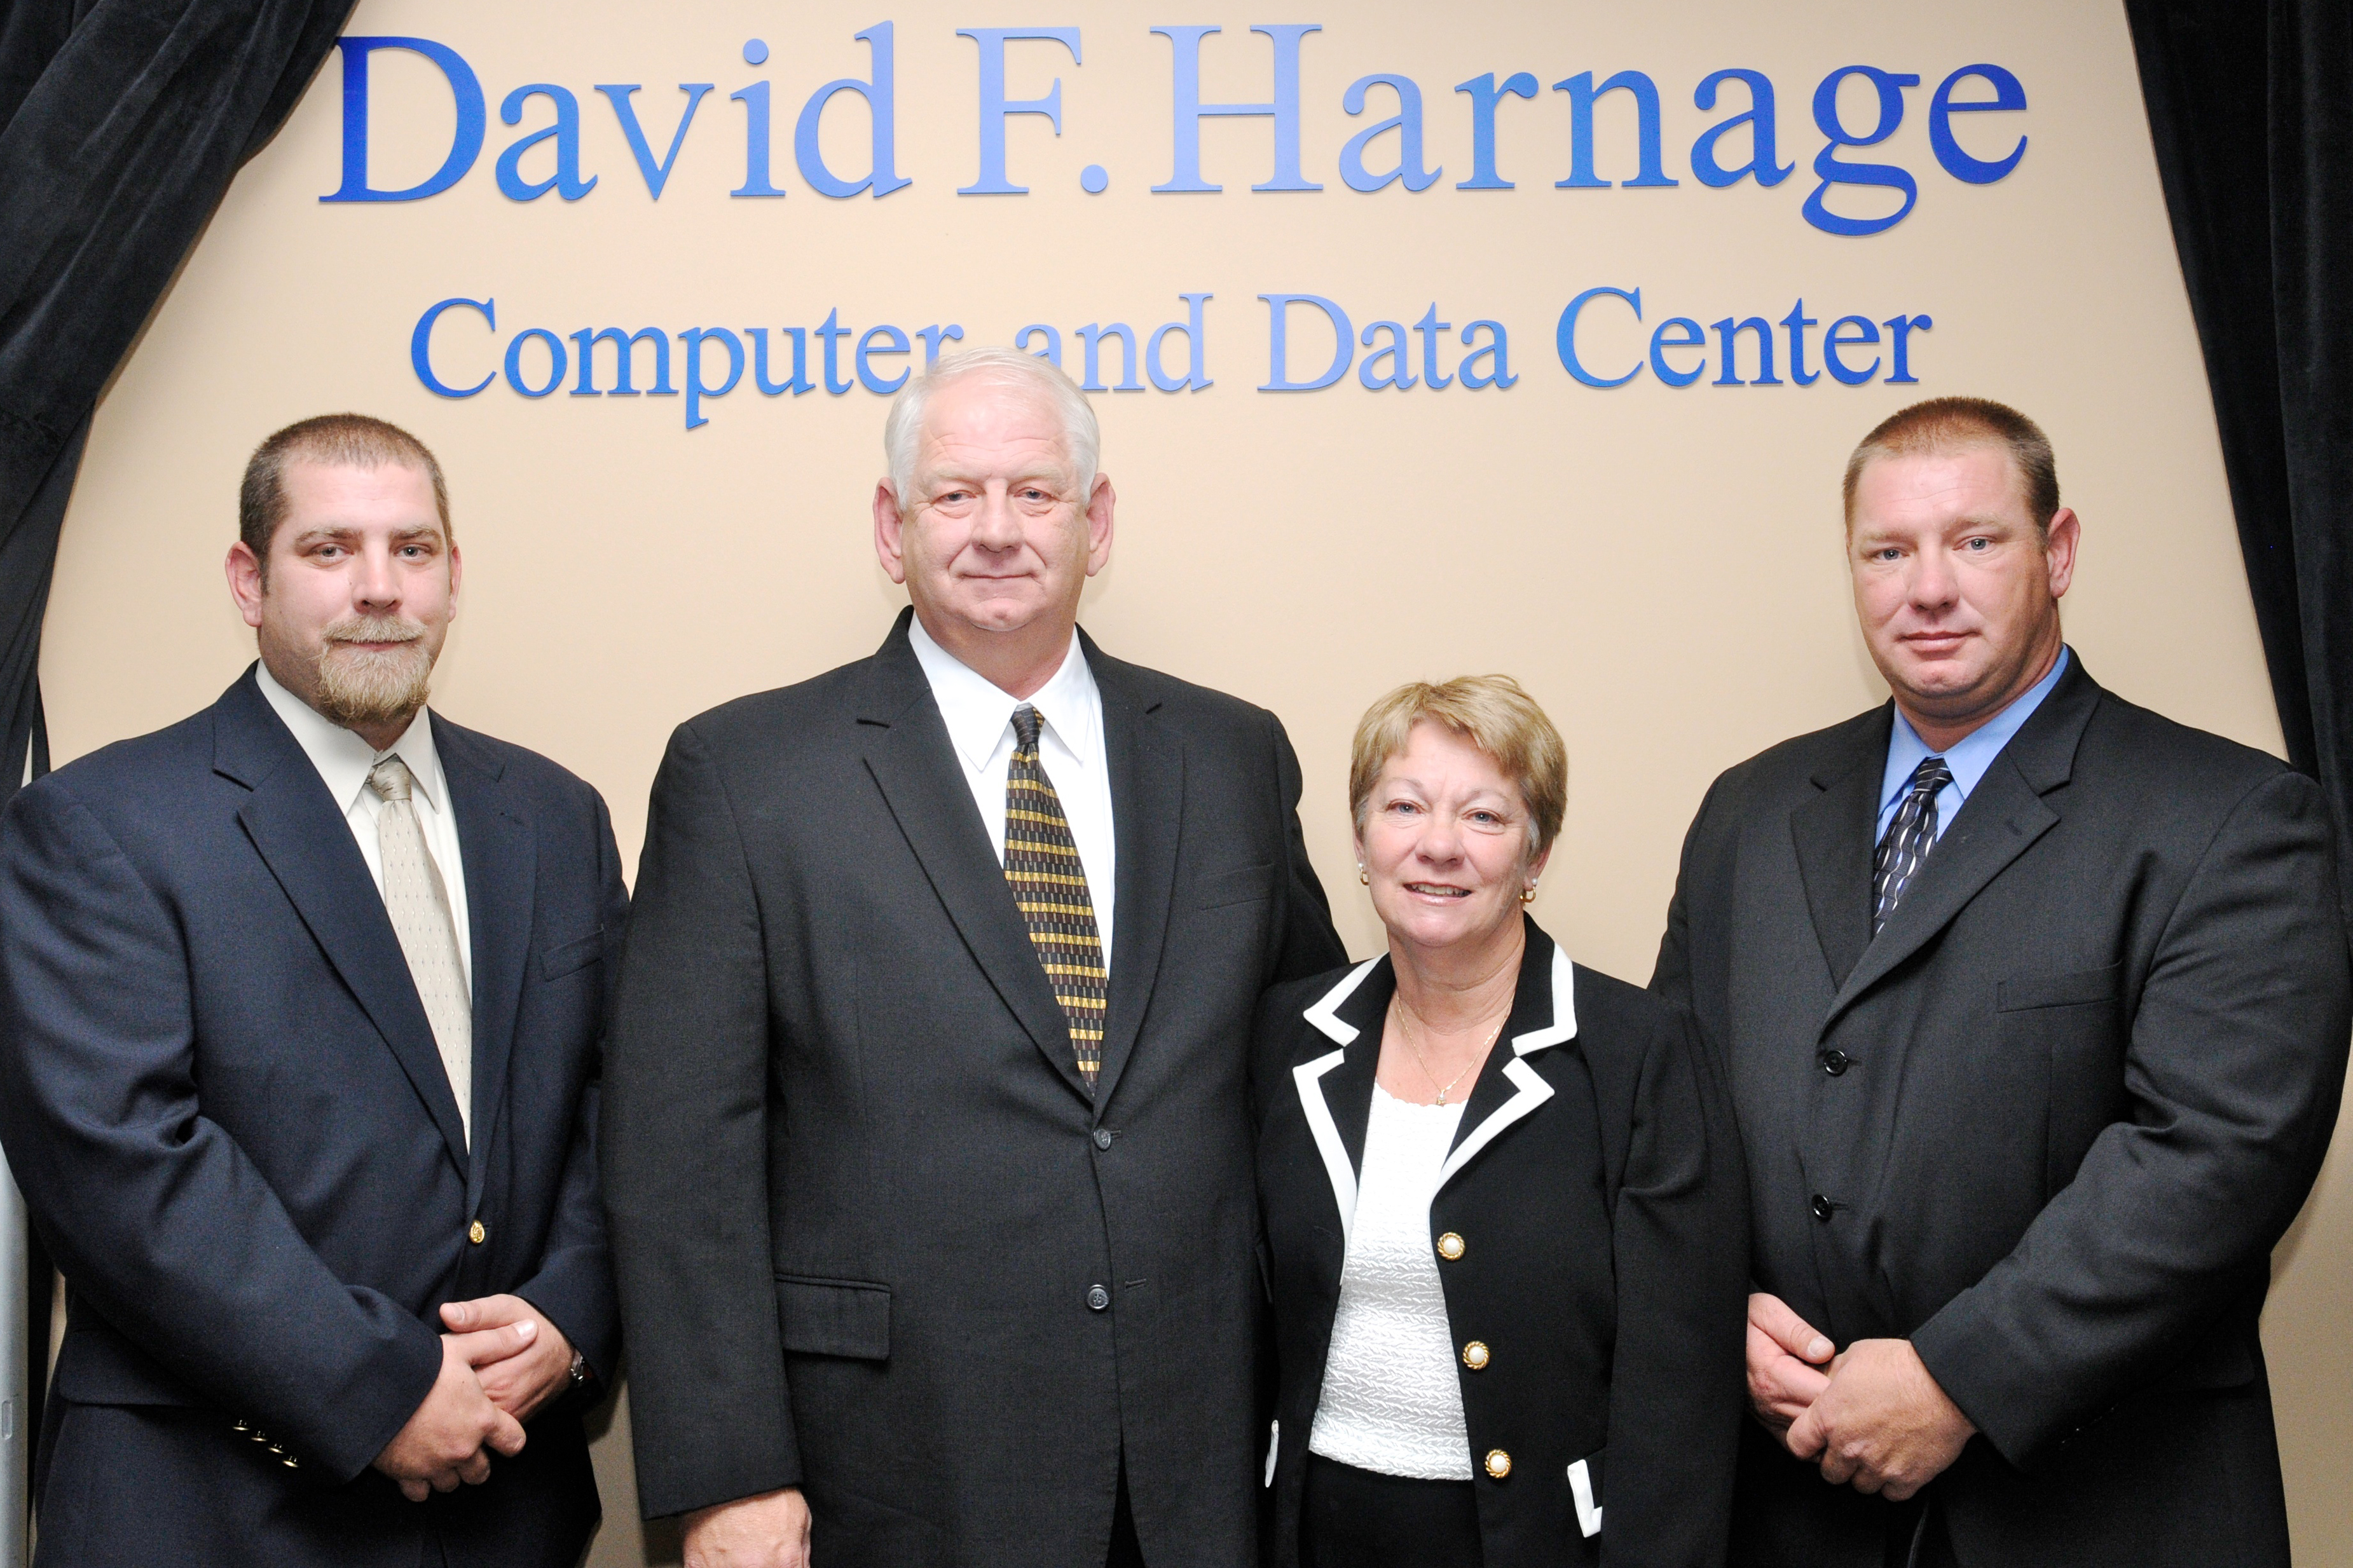 David F. Harnage Computer and Data Center dedication